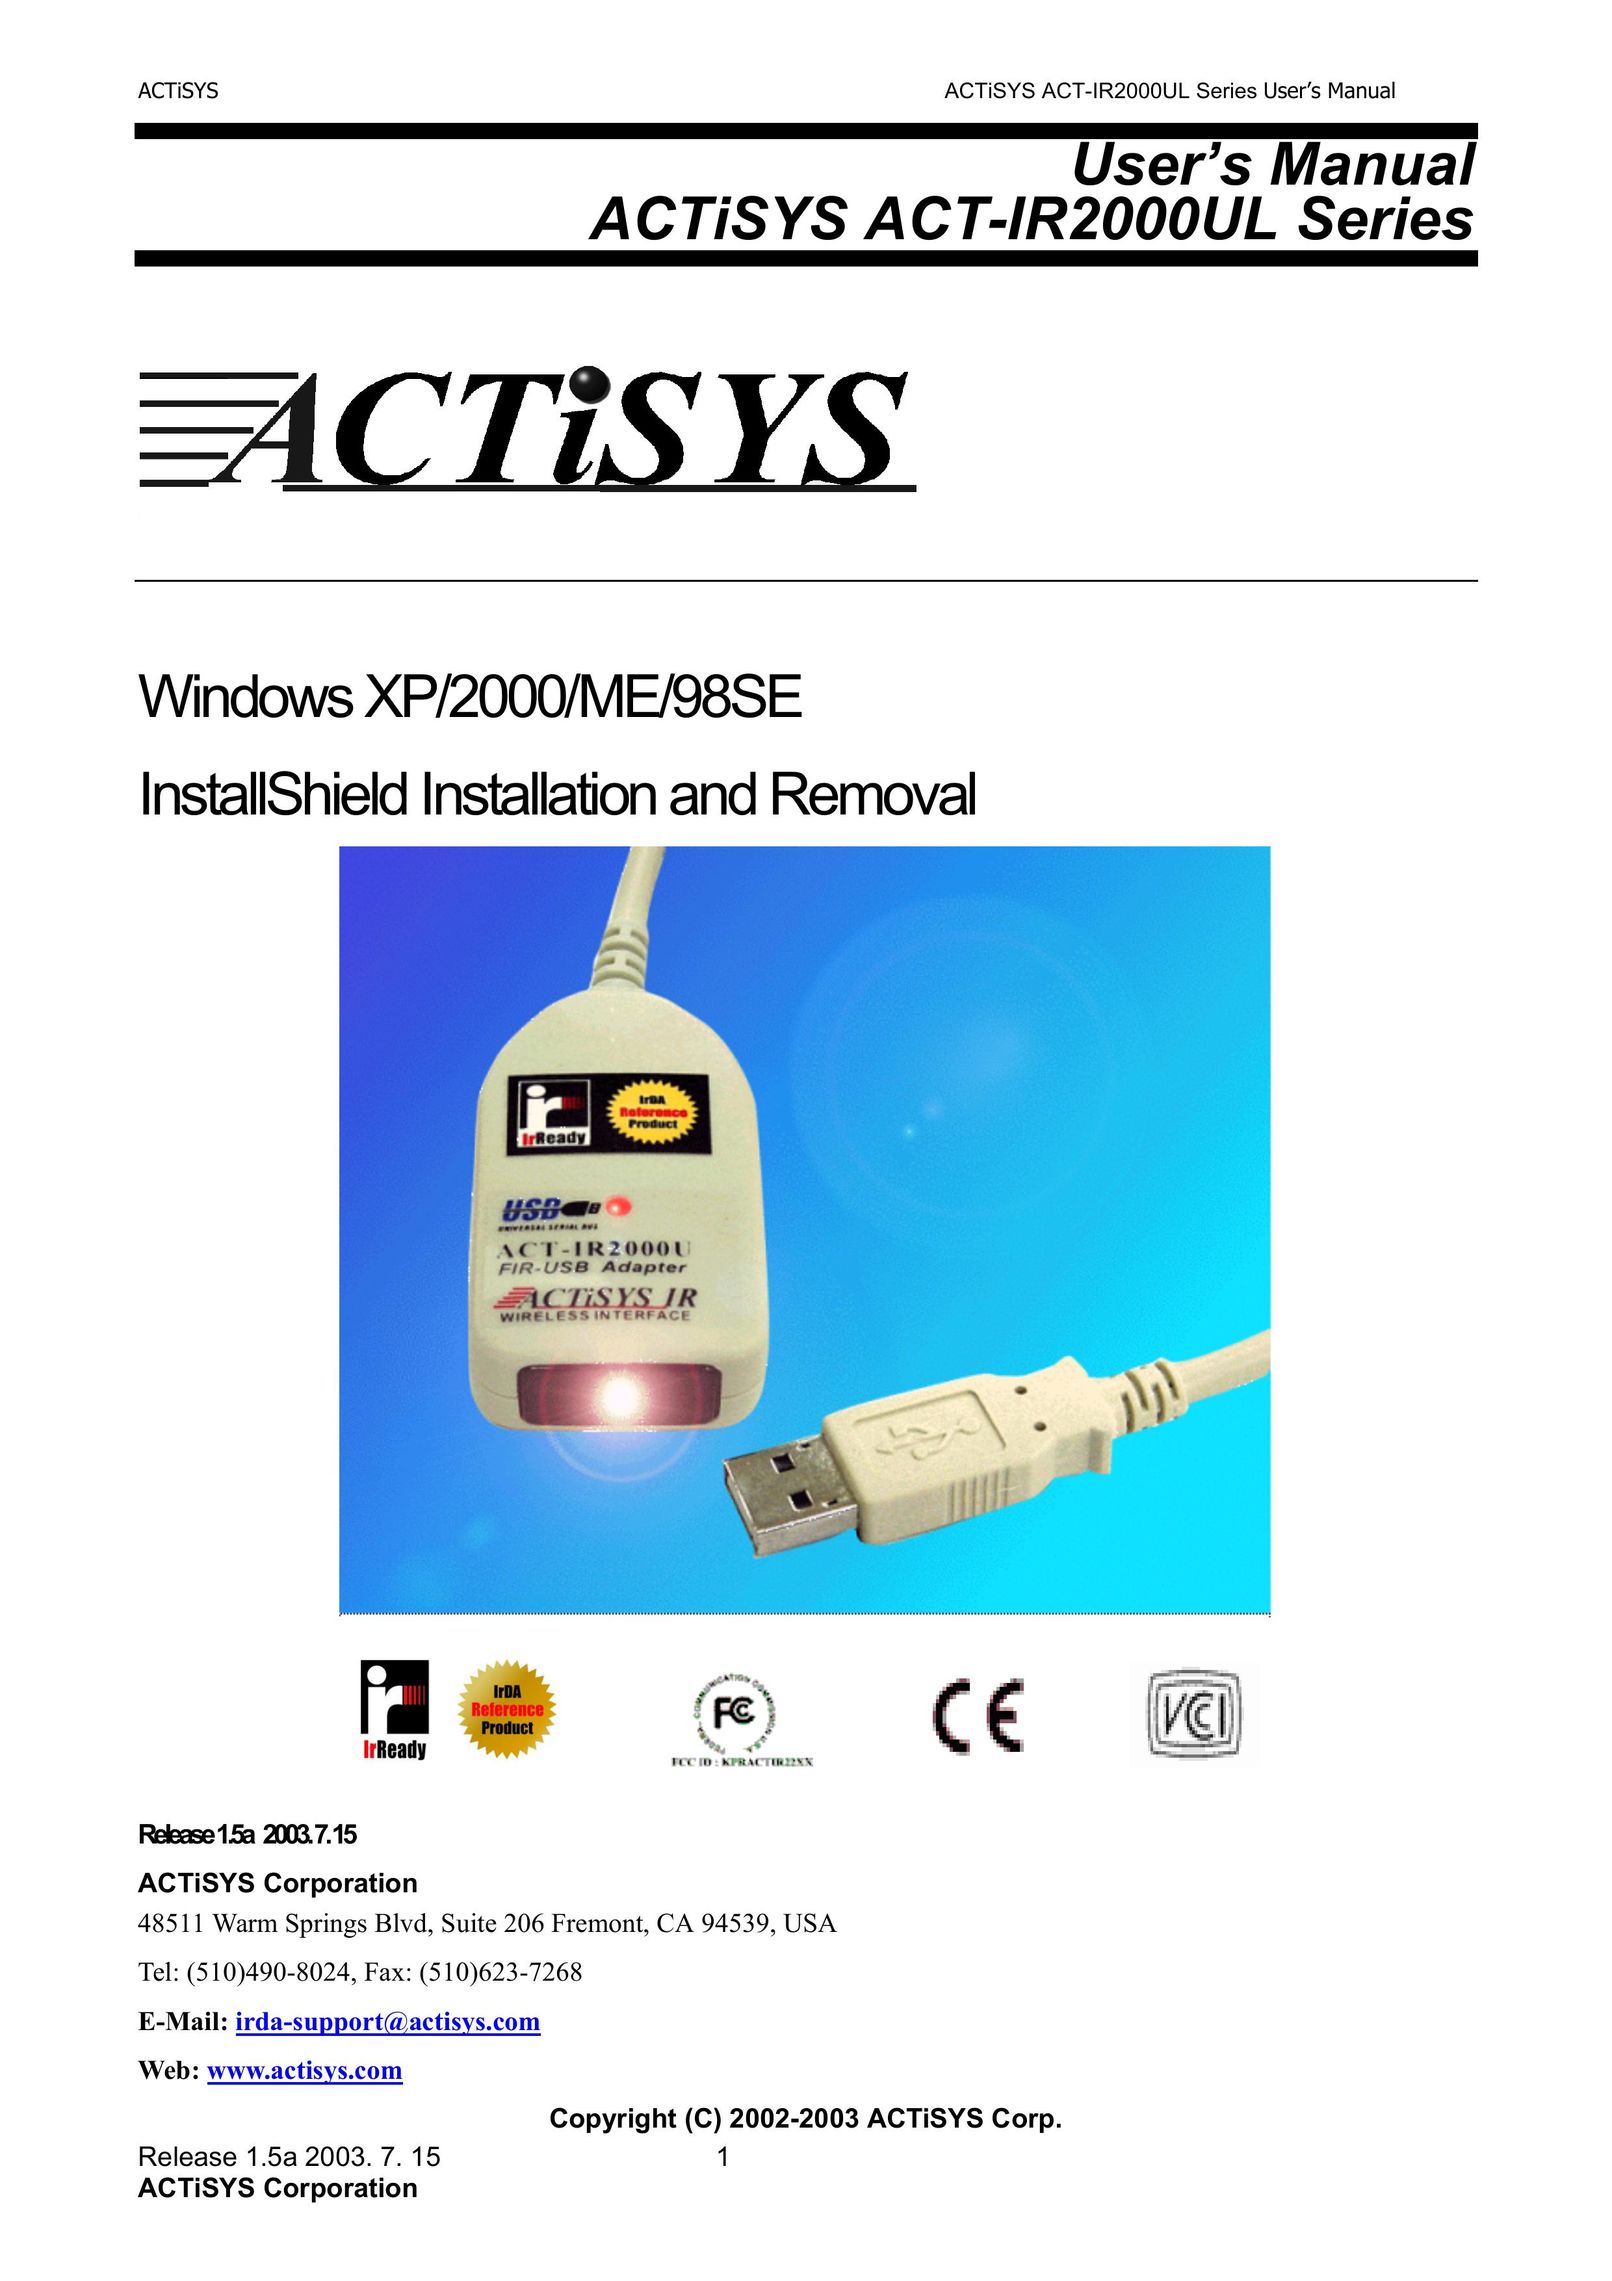 ACTiSYS ACT-IR2000UL Computer Accessories User Manual